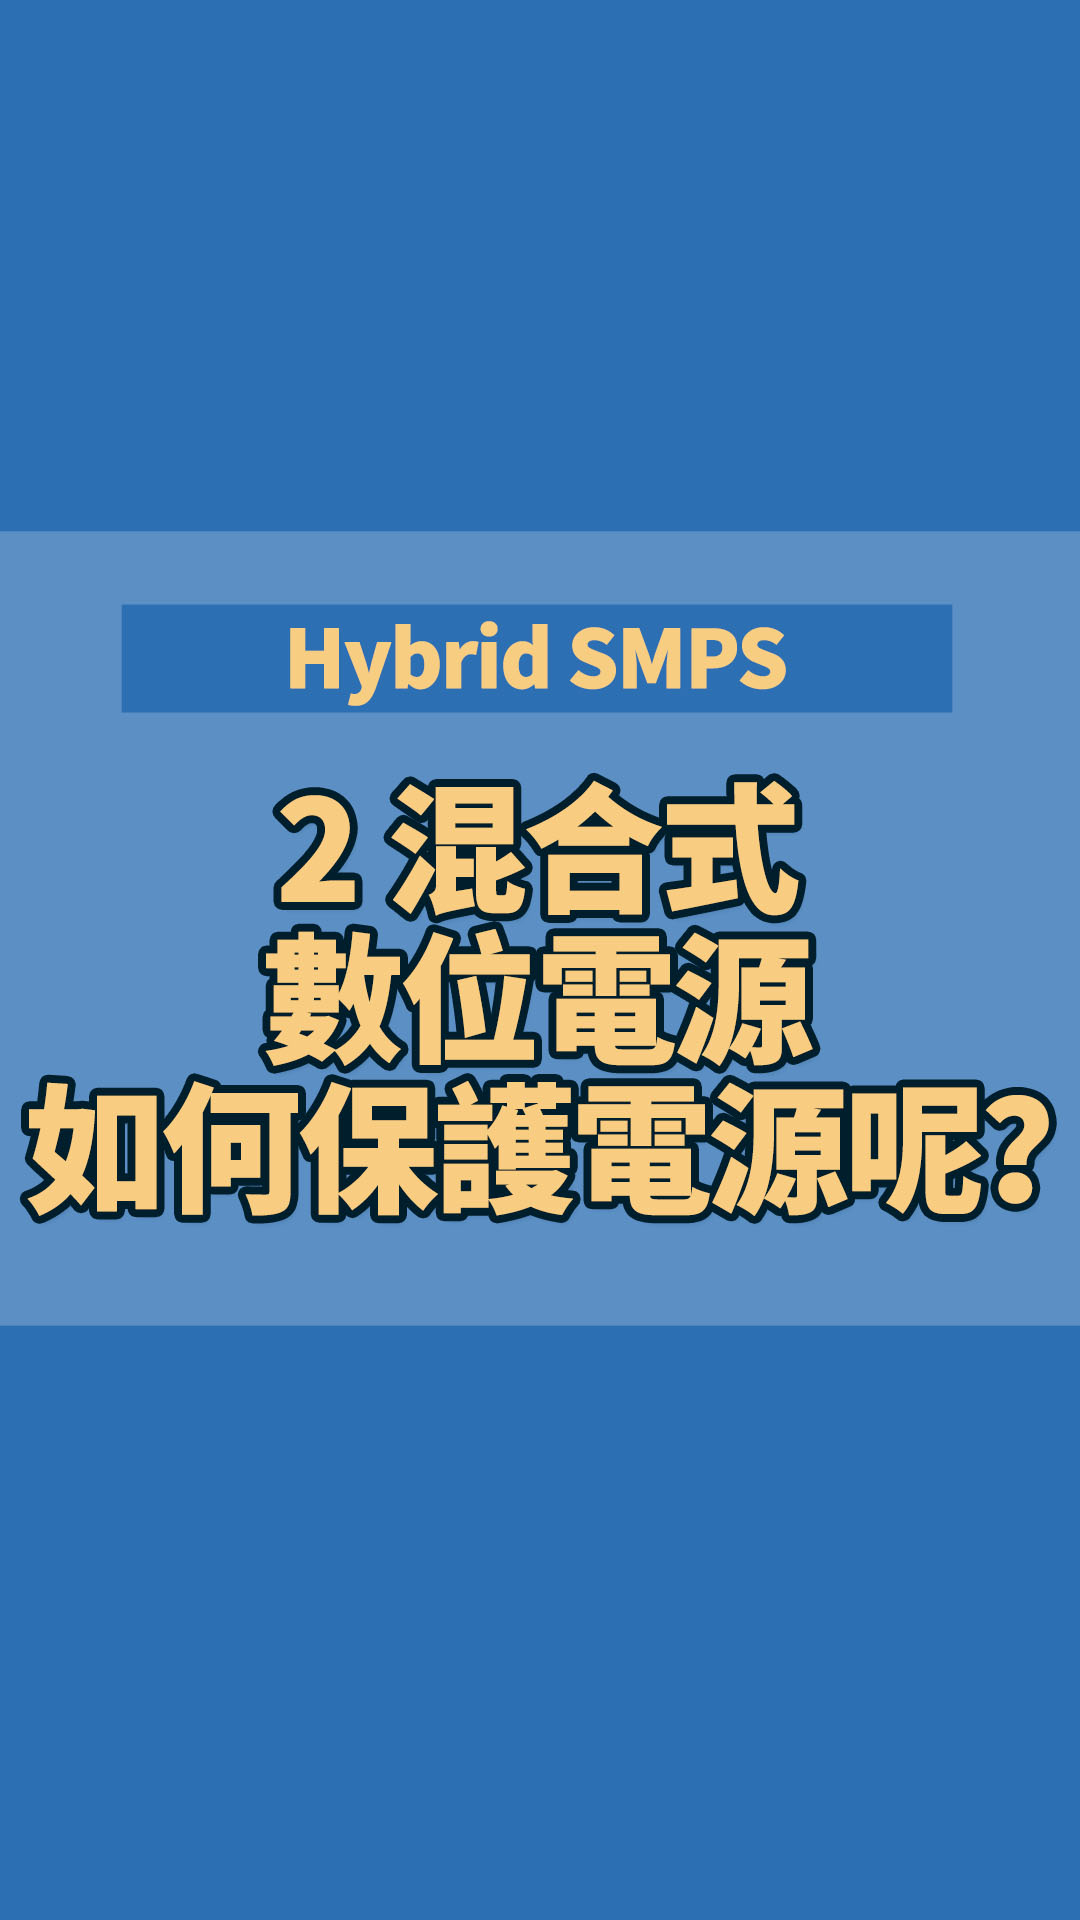 Hybrid SMPS 2 混合式數位電源如何保護電源呢？提供幾個基本範例做為參考哦！